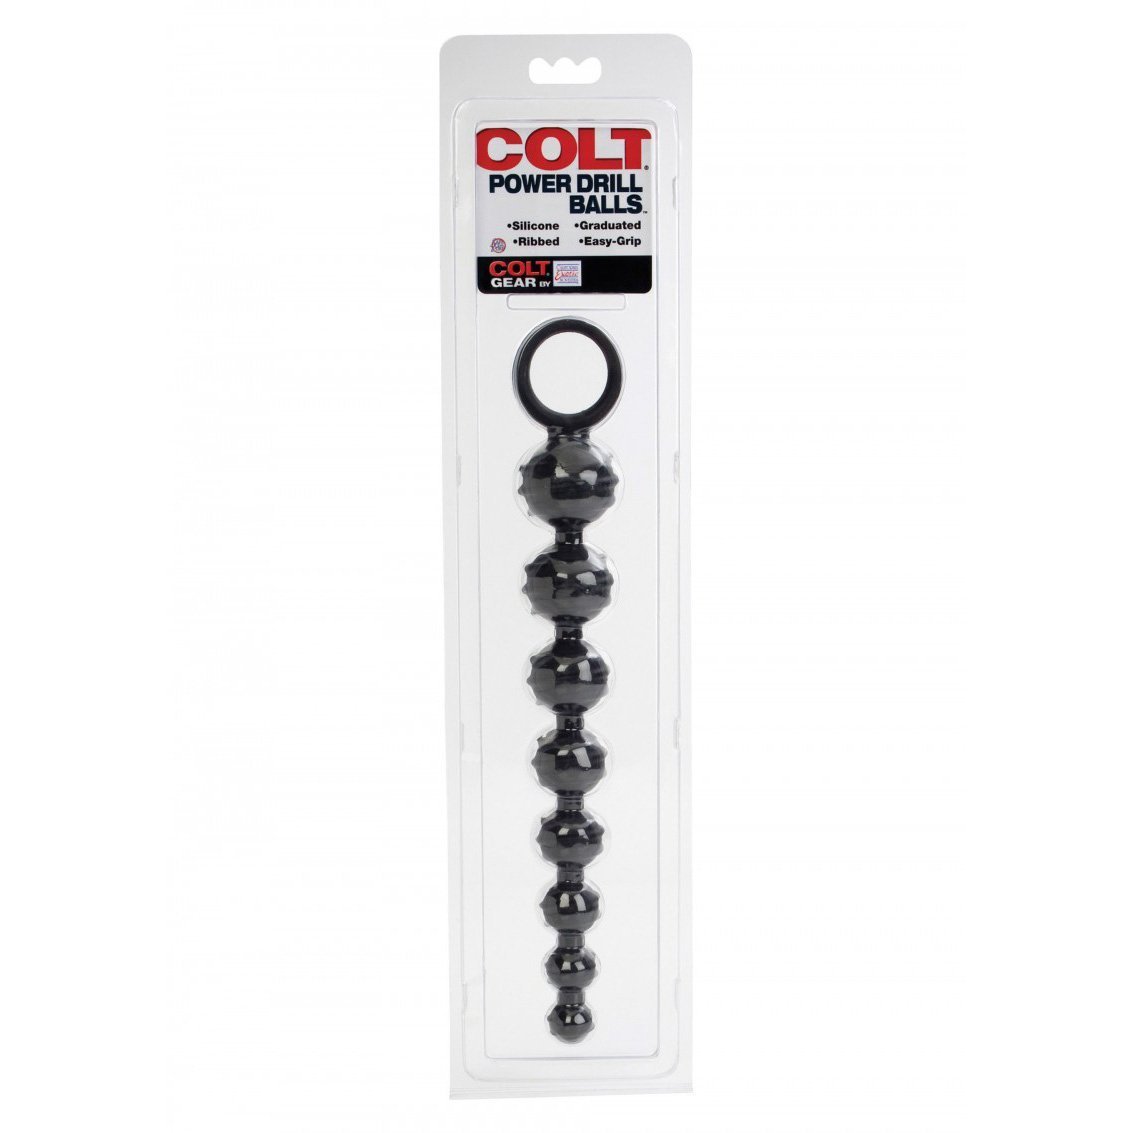 Colt - Power Drill Balls Anal Beads (Black) Anal Beads (Non Vibration) Durio Asia